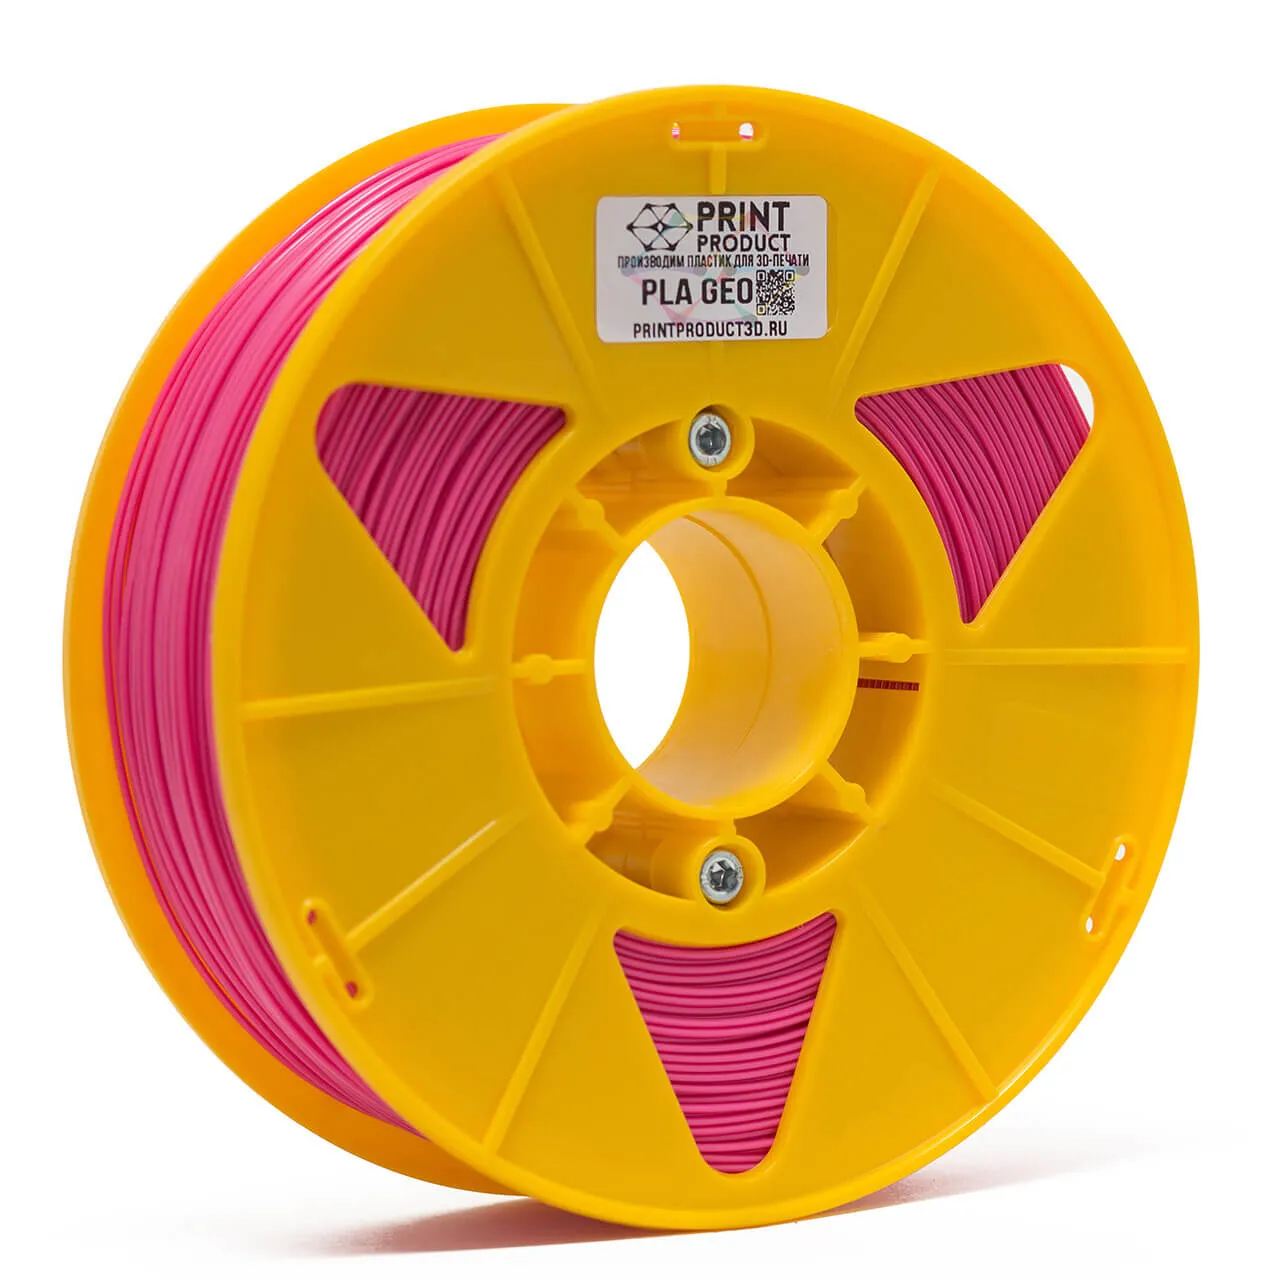 PLA GEO пластик PrintProduct 1,75 мм Розовый 1 кг